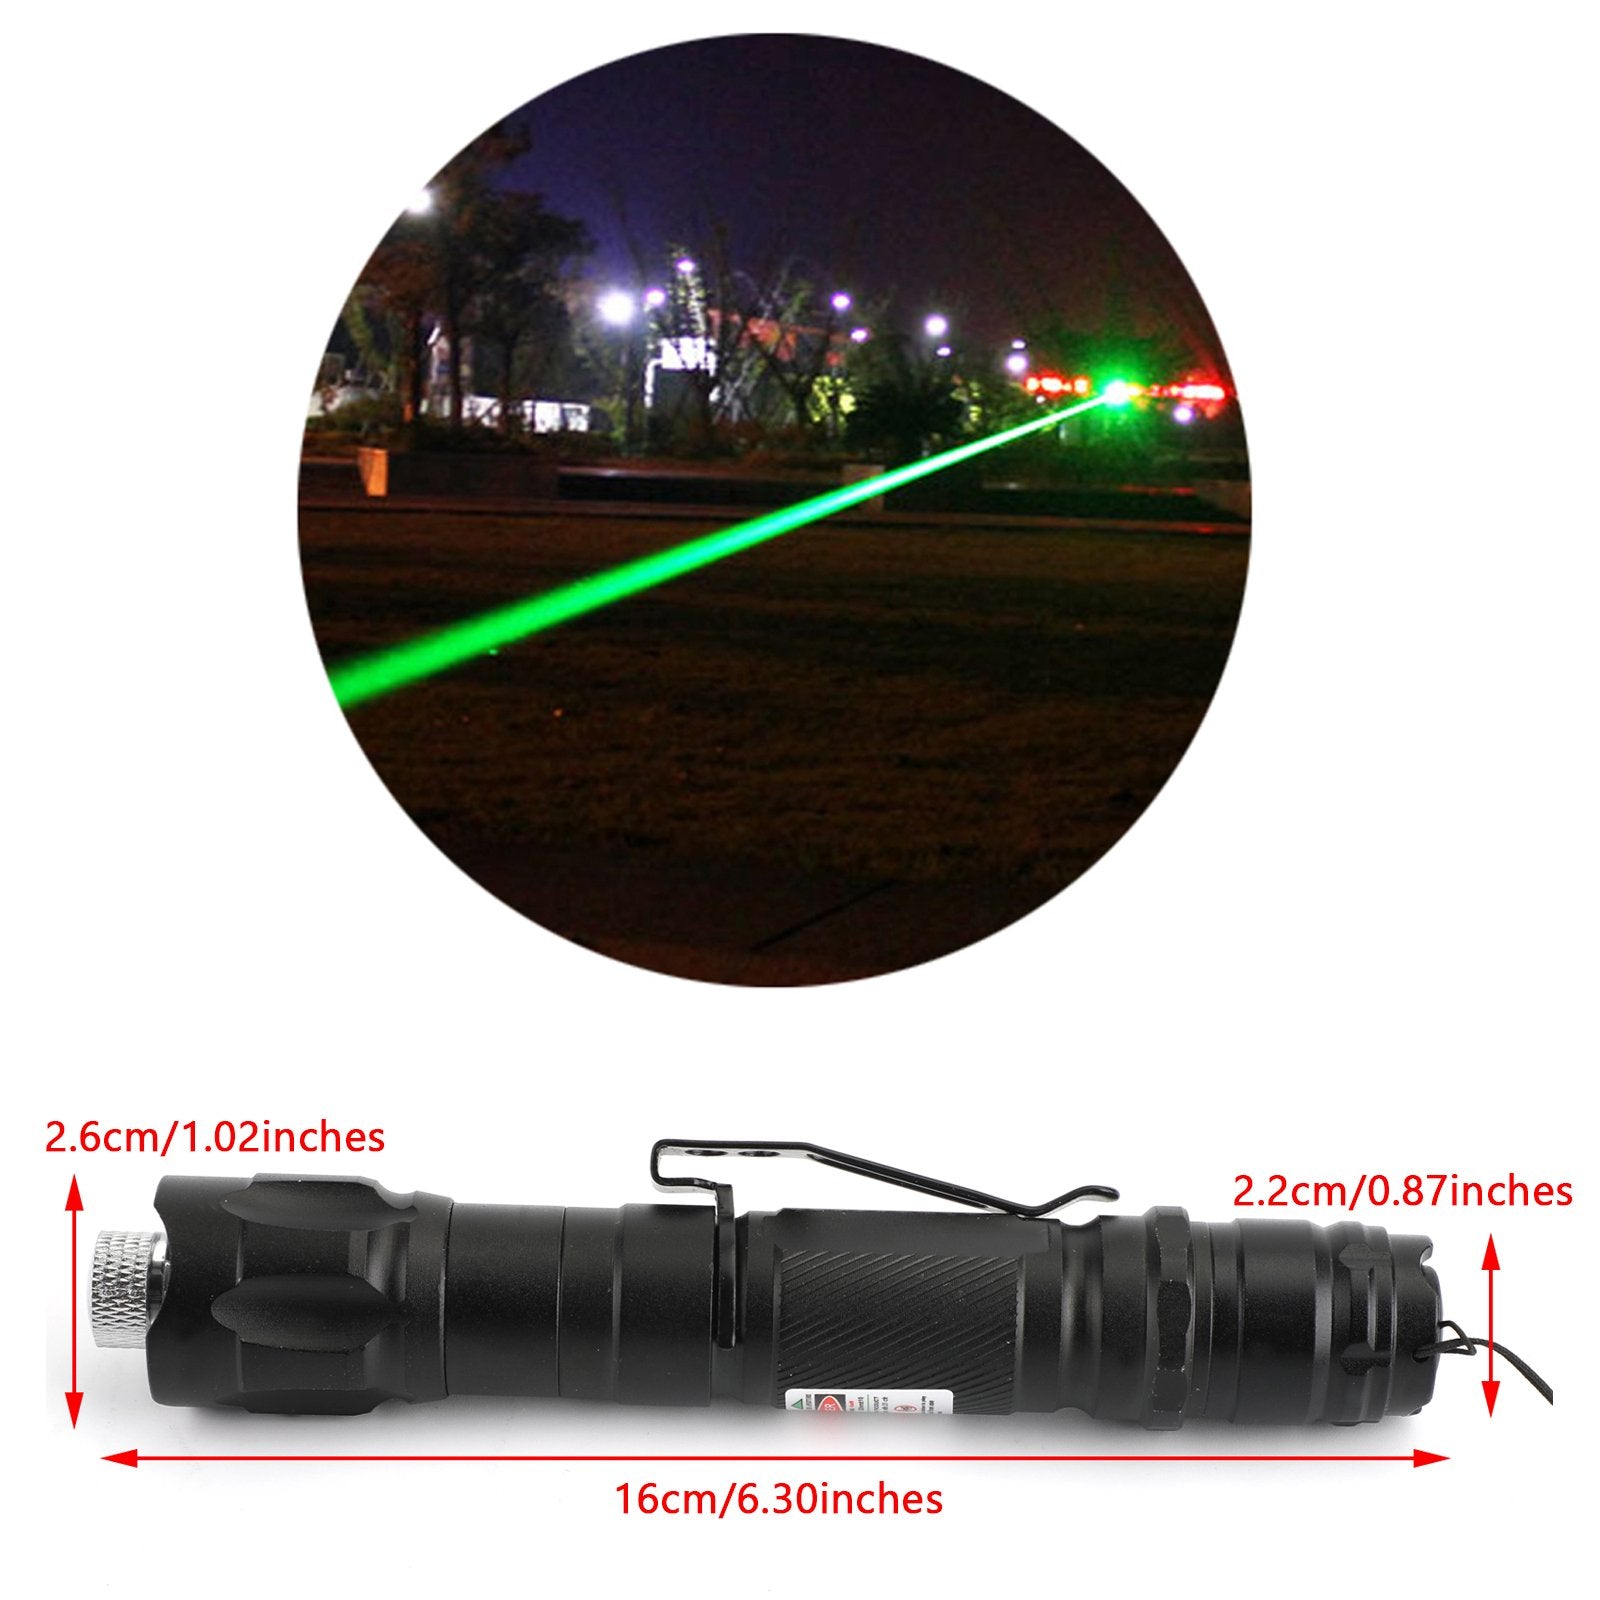 Military 532nm Green Laser Pointer Pen Visible Beam + Battery +Star Cap